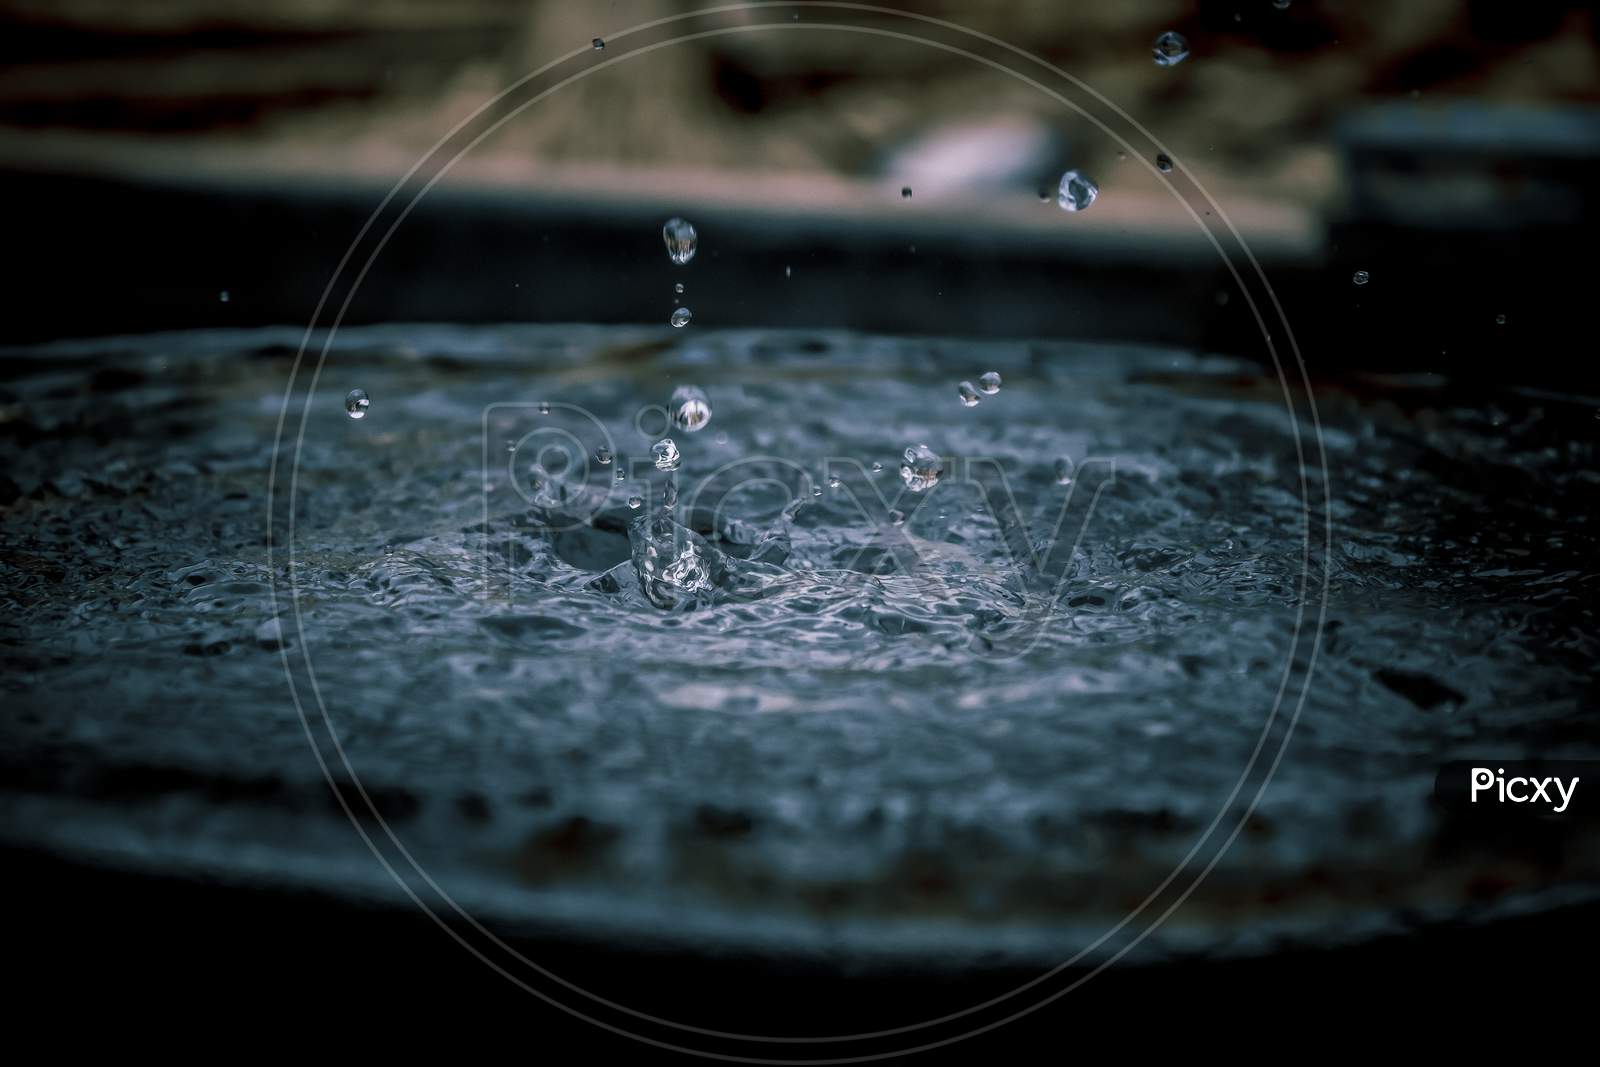 Water Droplets Macro Close up Photography